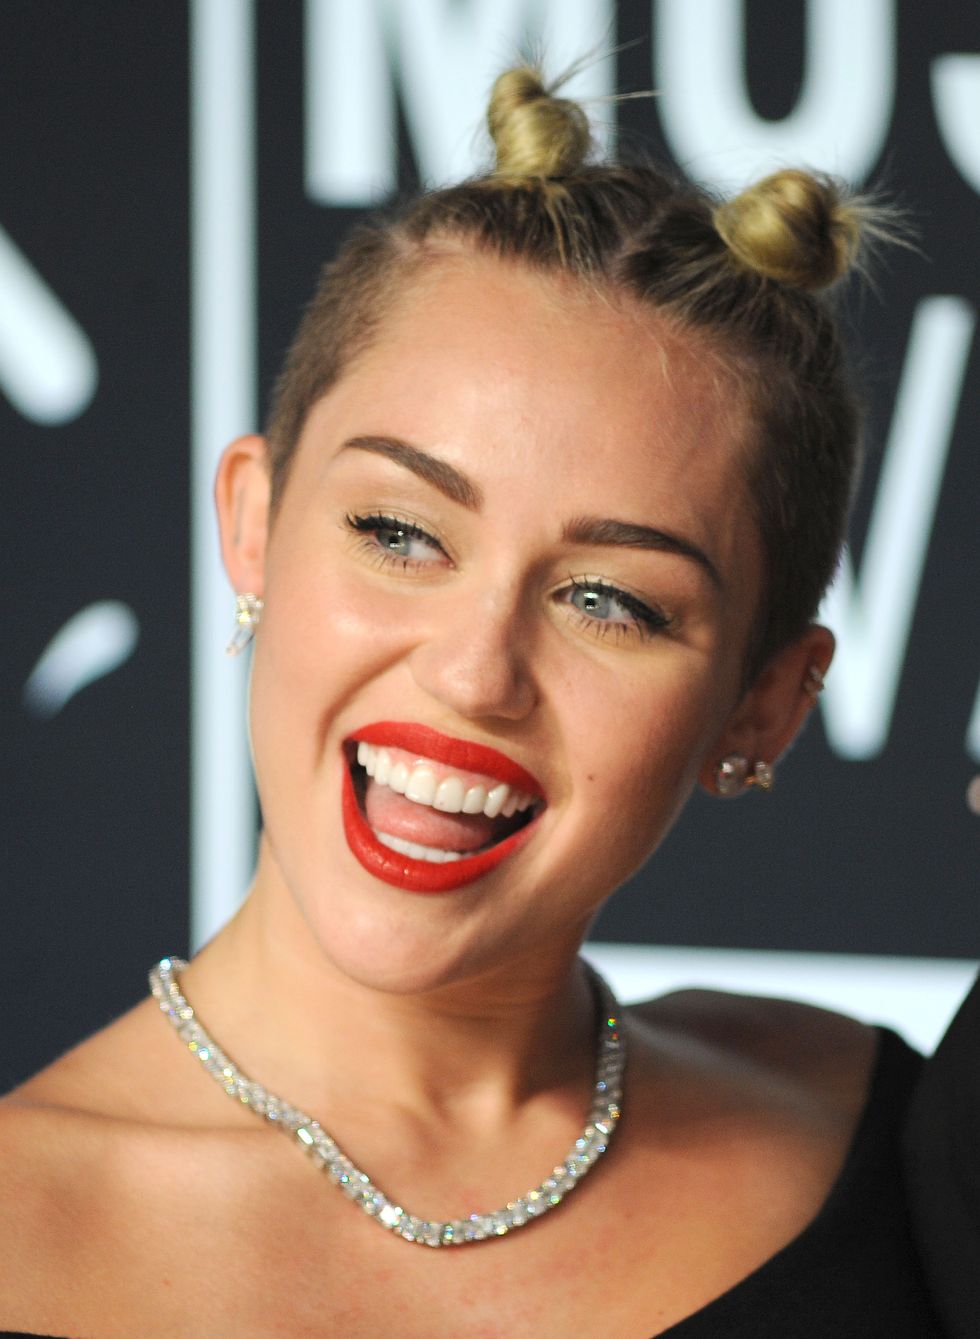 The iconic lipsticks celebrities wear - Miley Cyrus